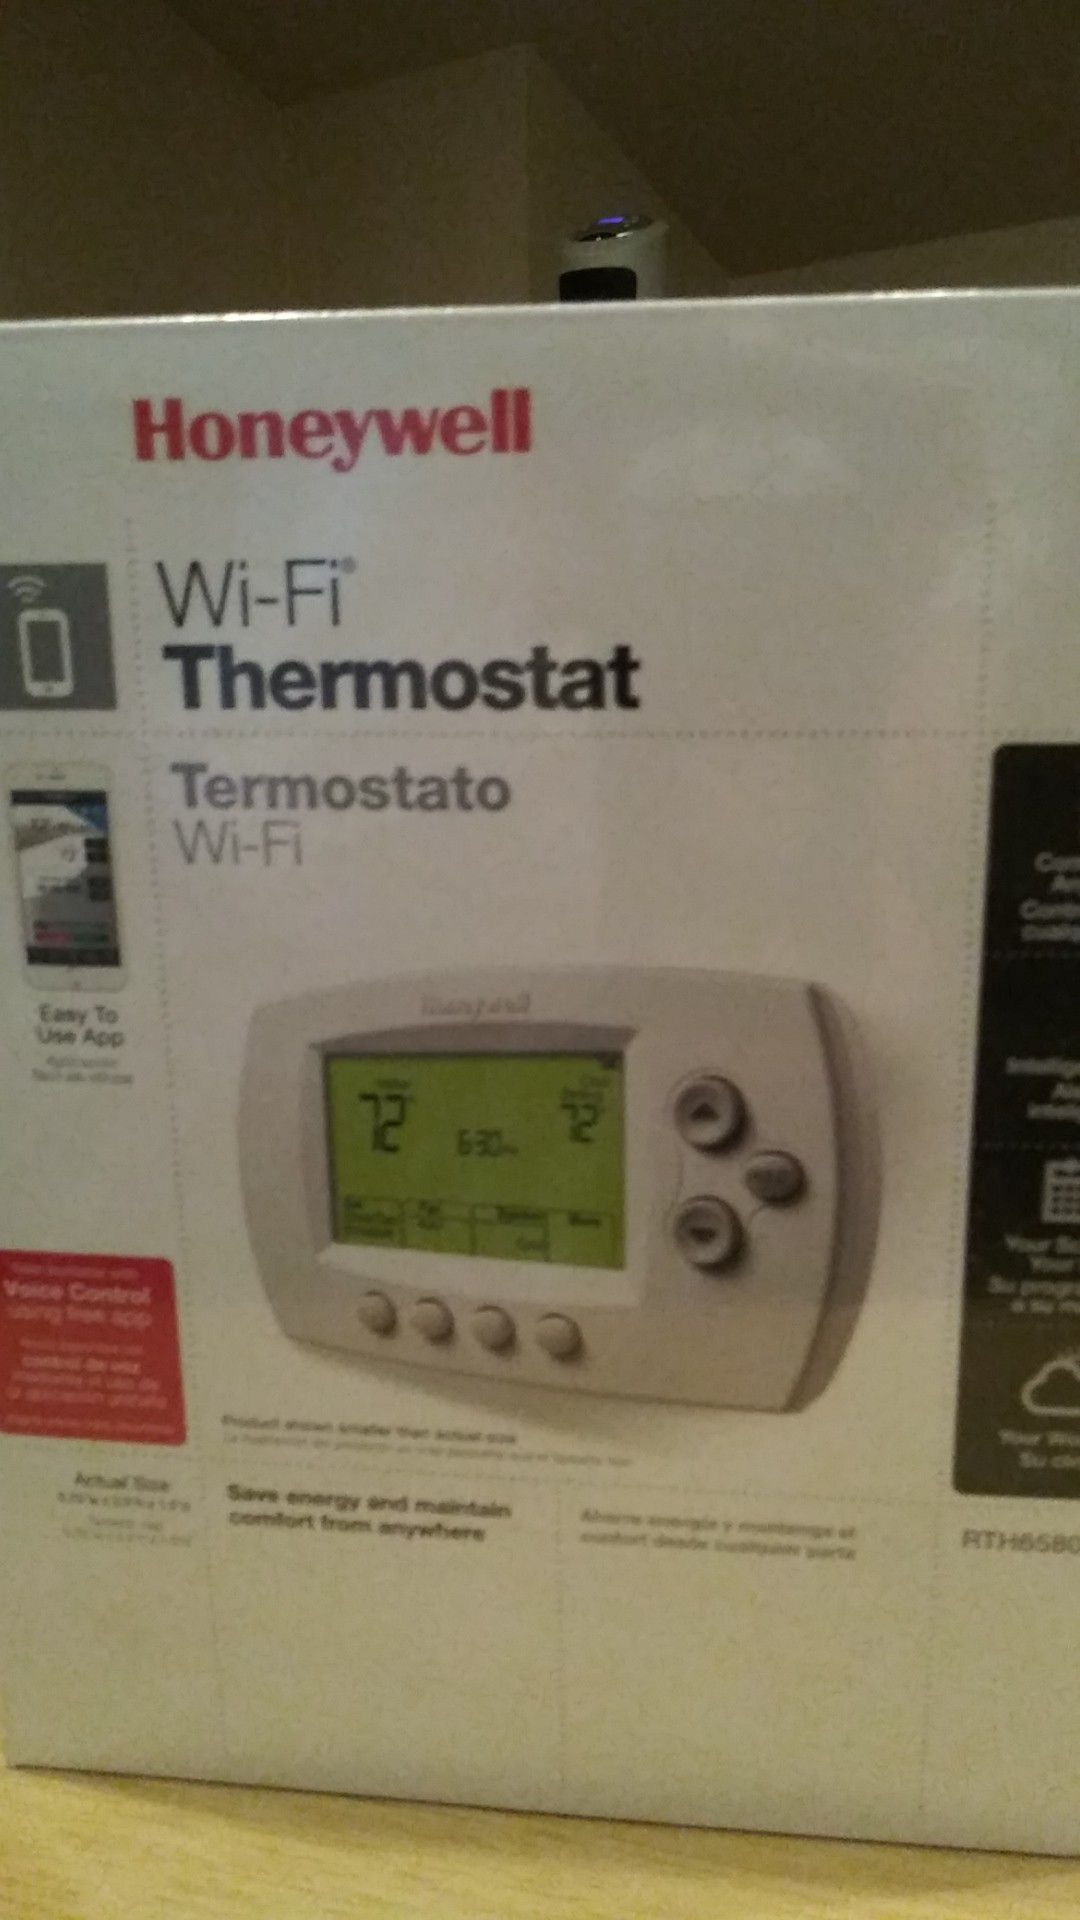 Honeywell wi-fi thermostat